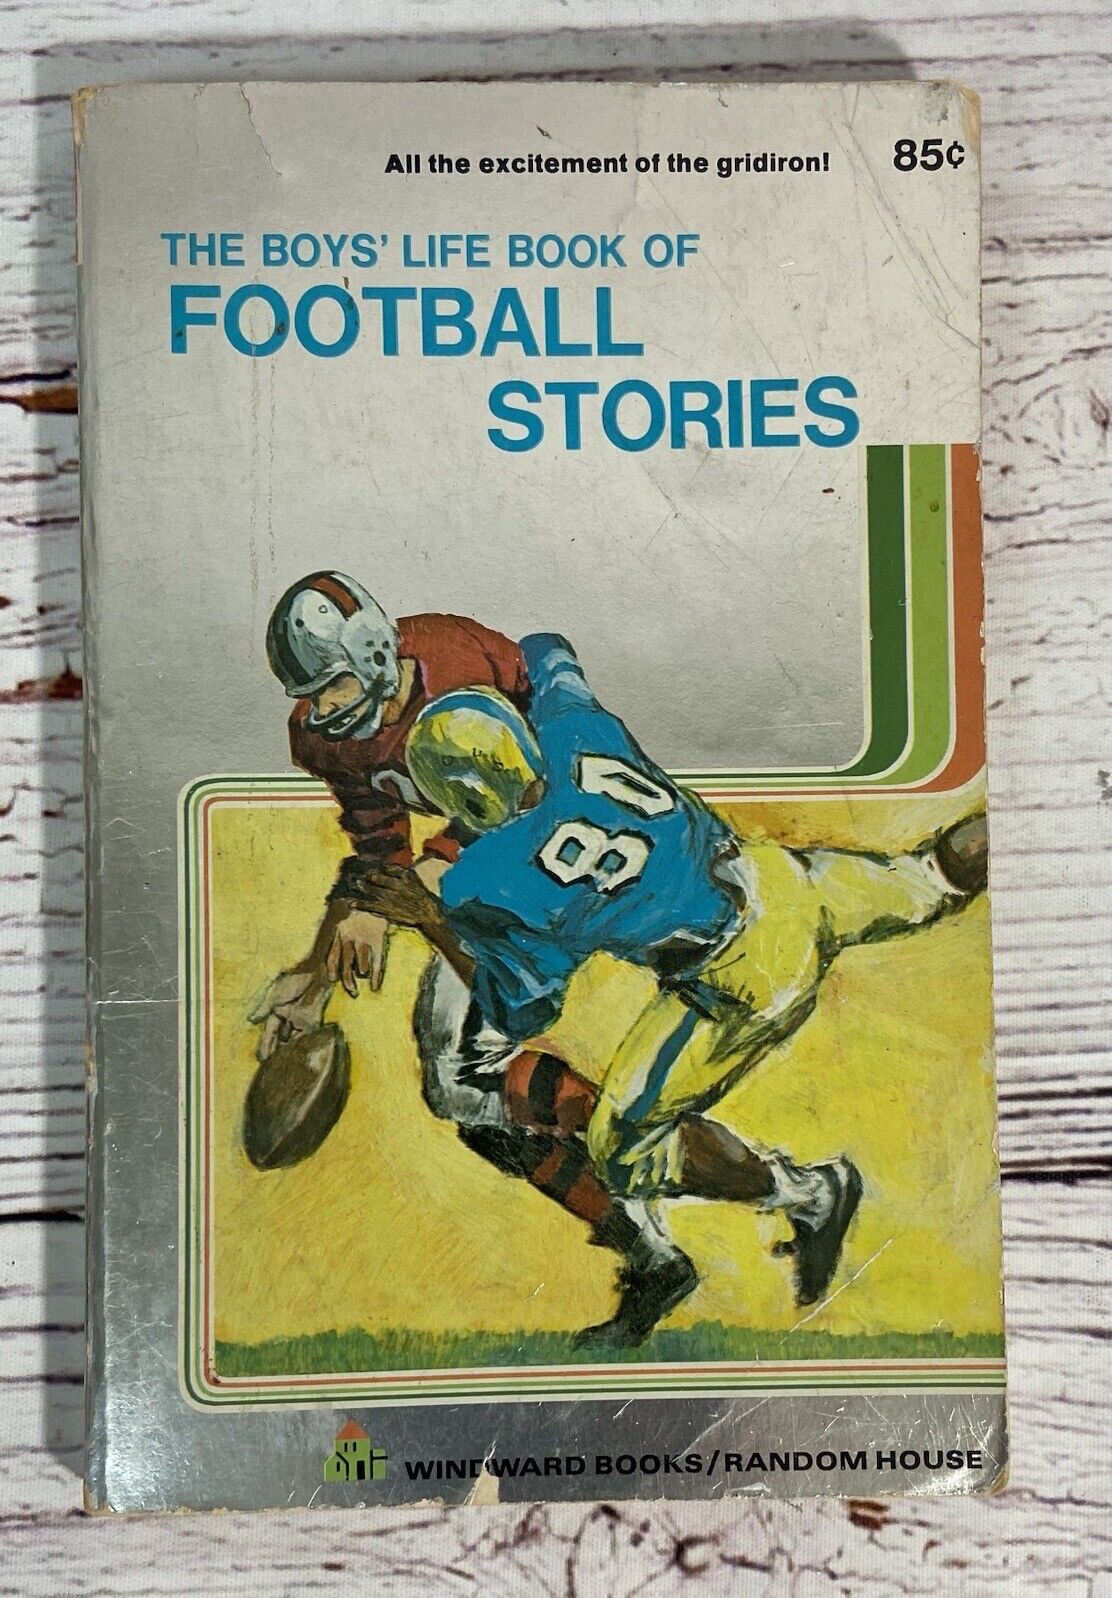 VTG Boy Scout BSA Boy's Life Book of Football Stories Paperback 1972